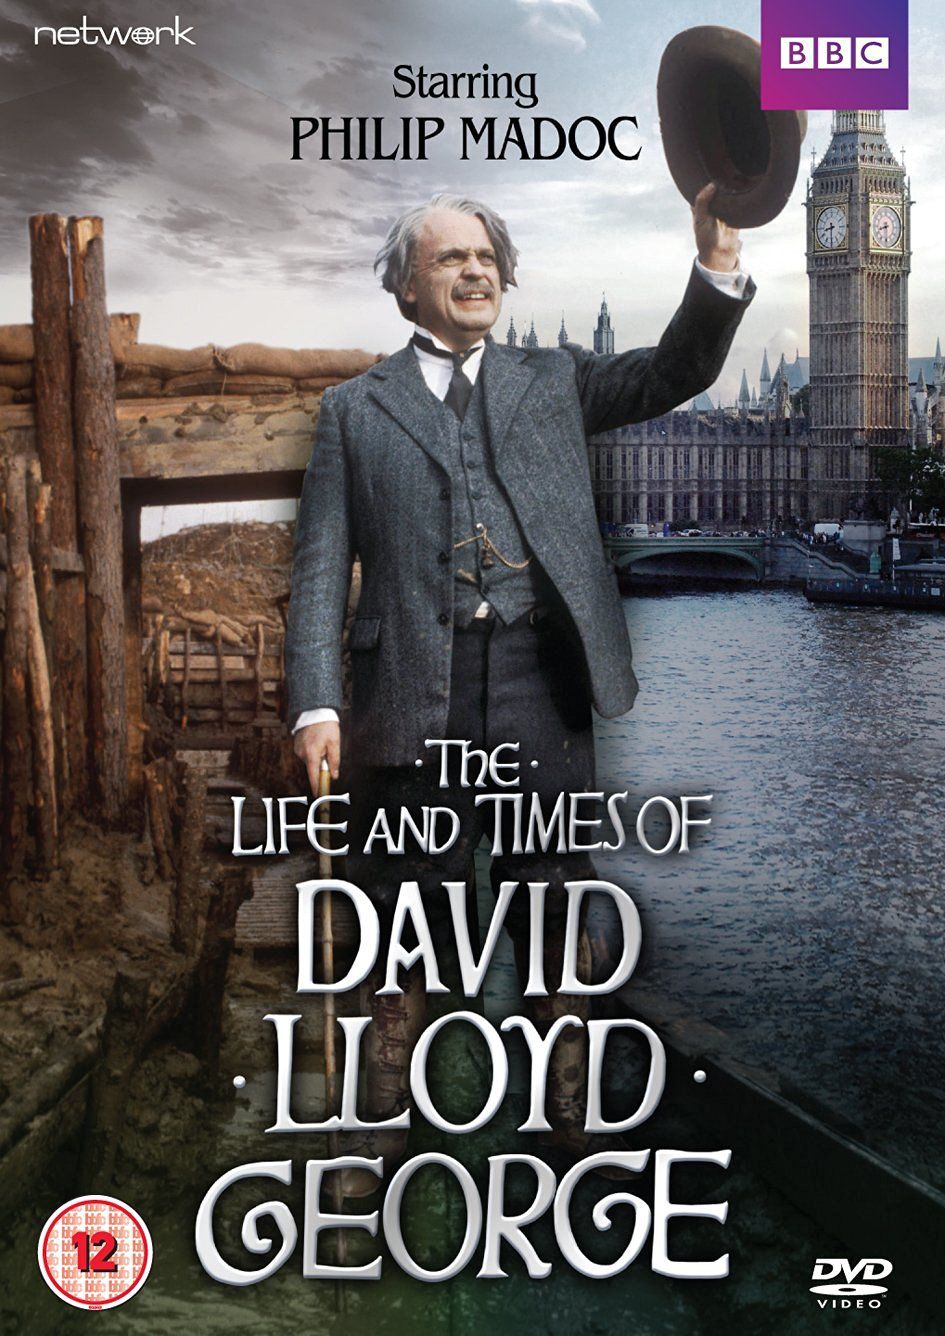 The Life and Times of David Lloyd George ne zaman